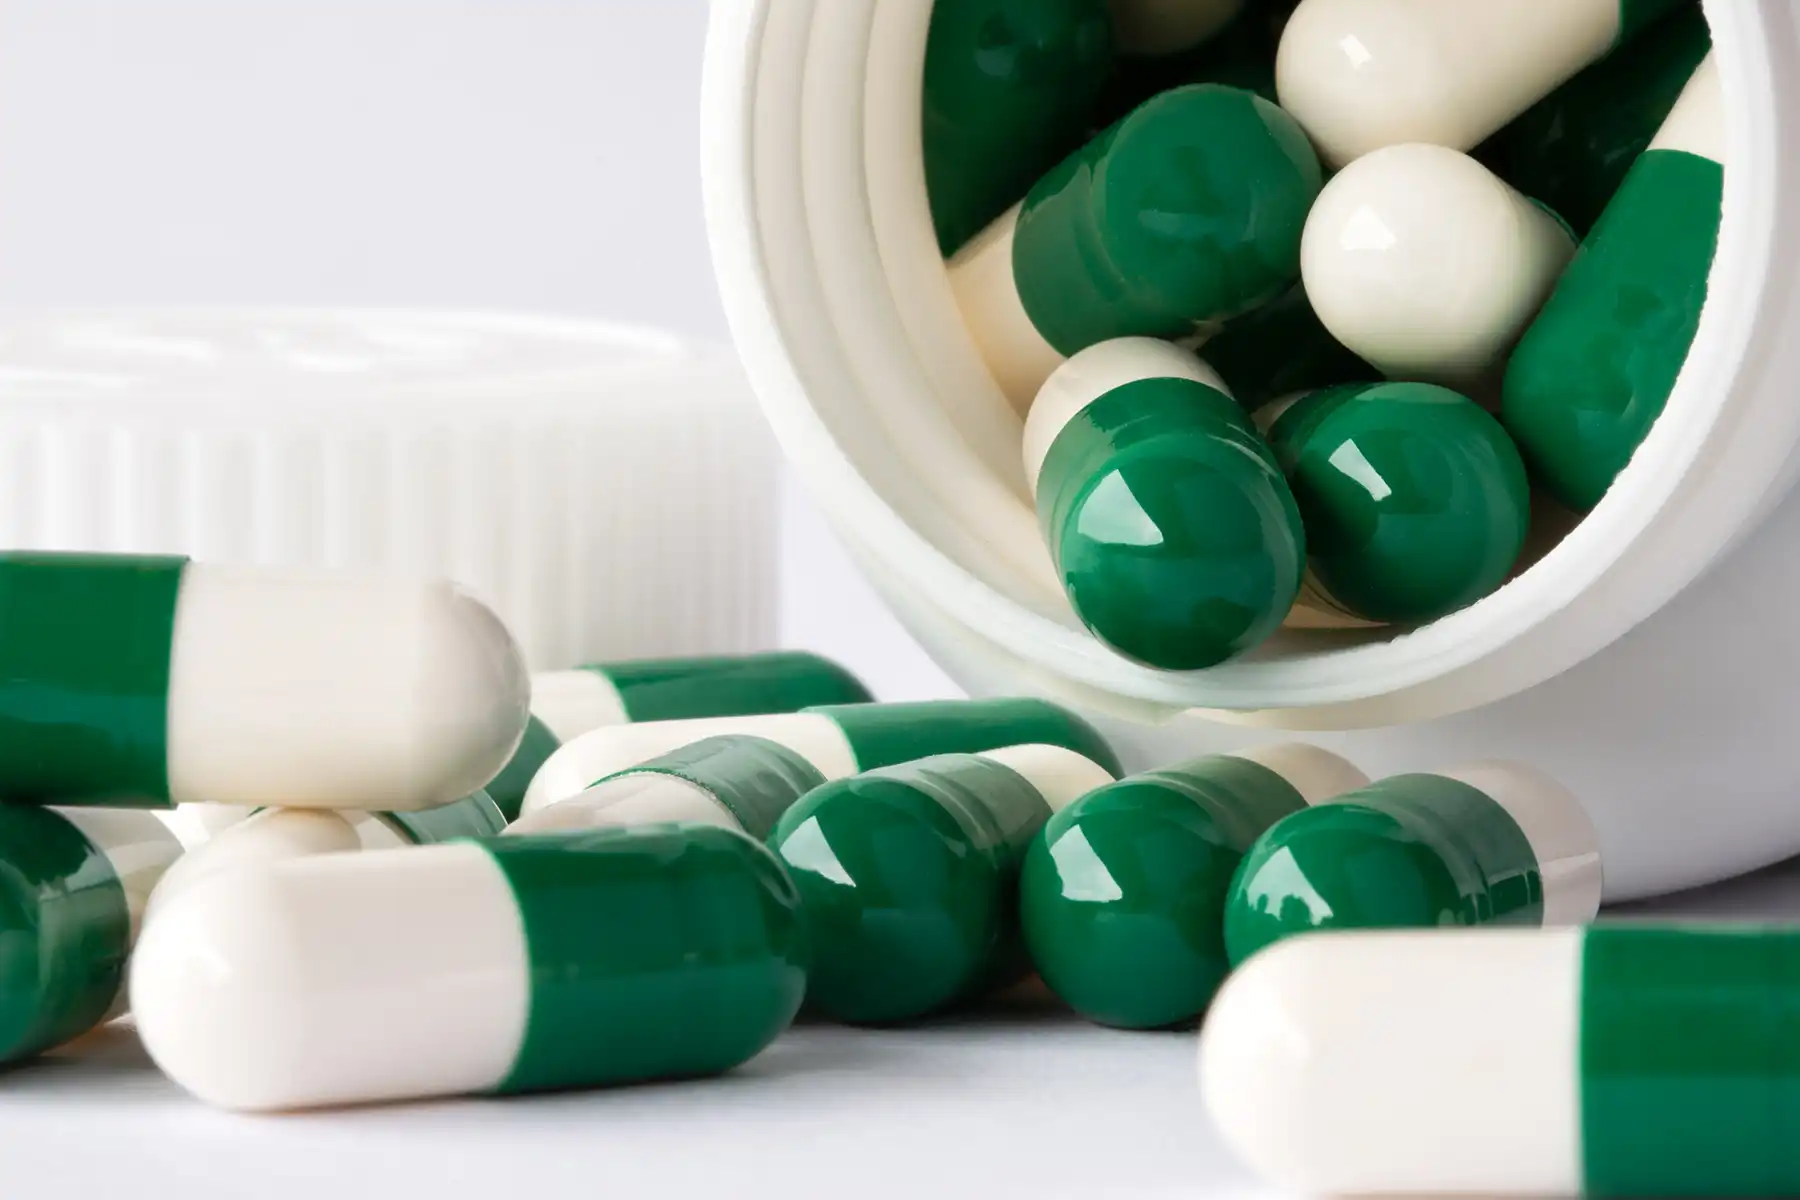 photo of green and white prescription pills